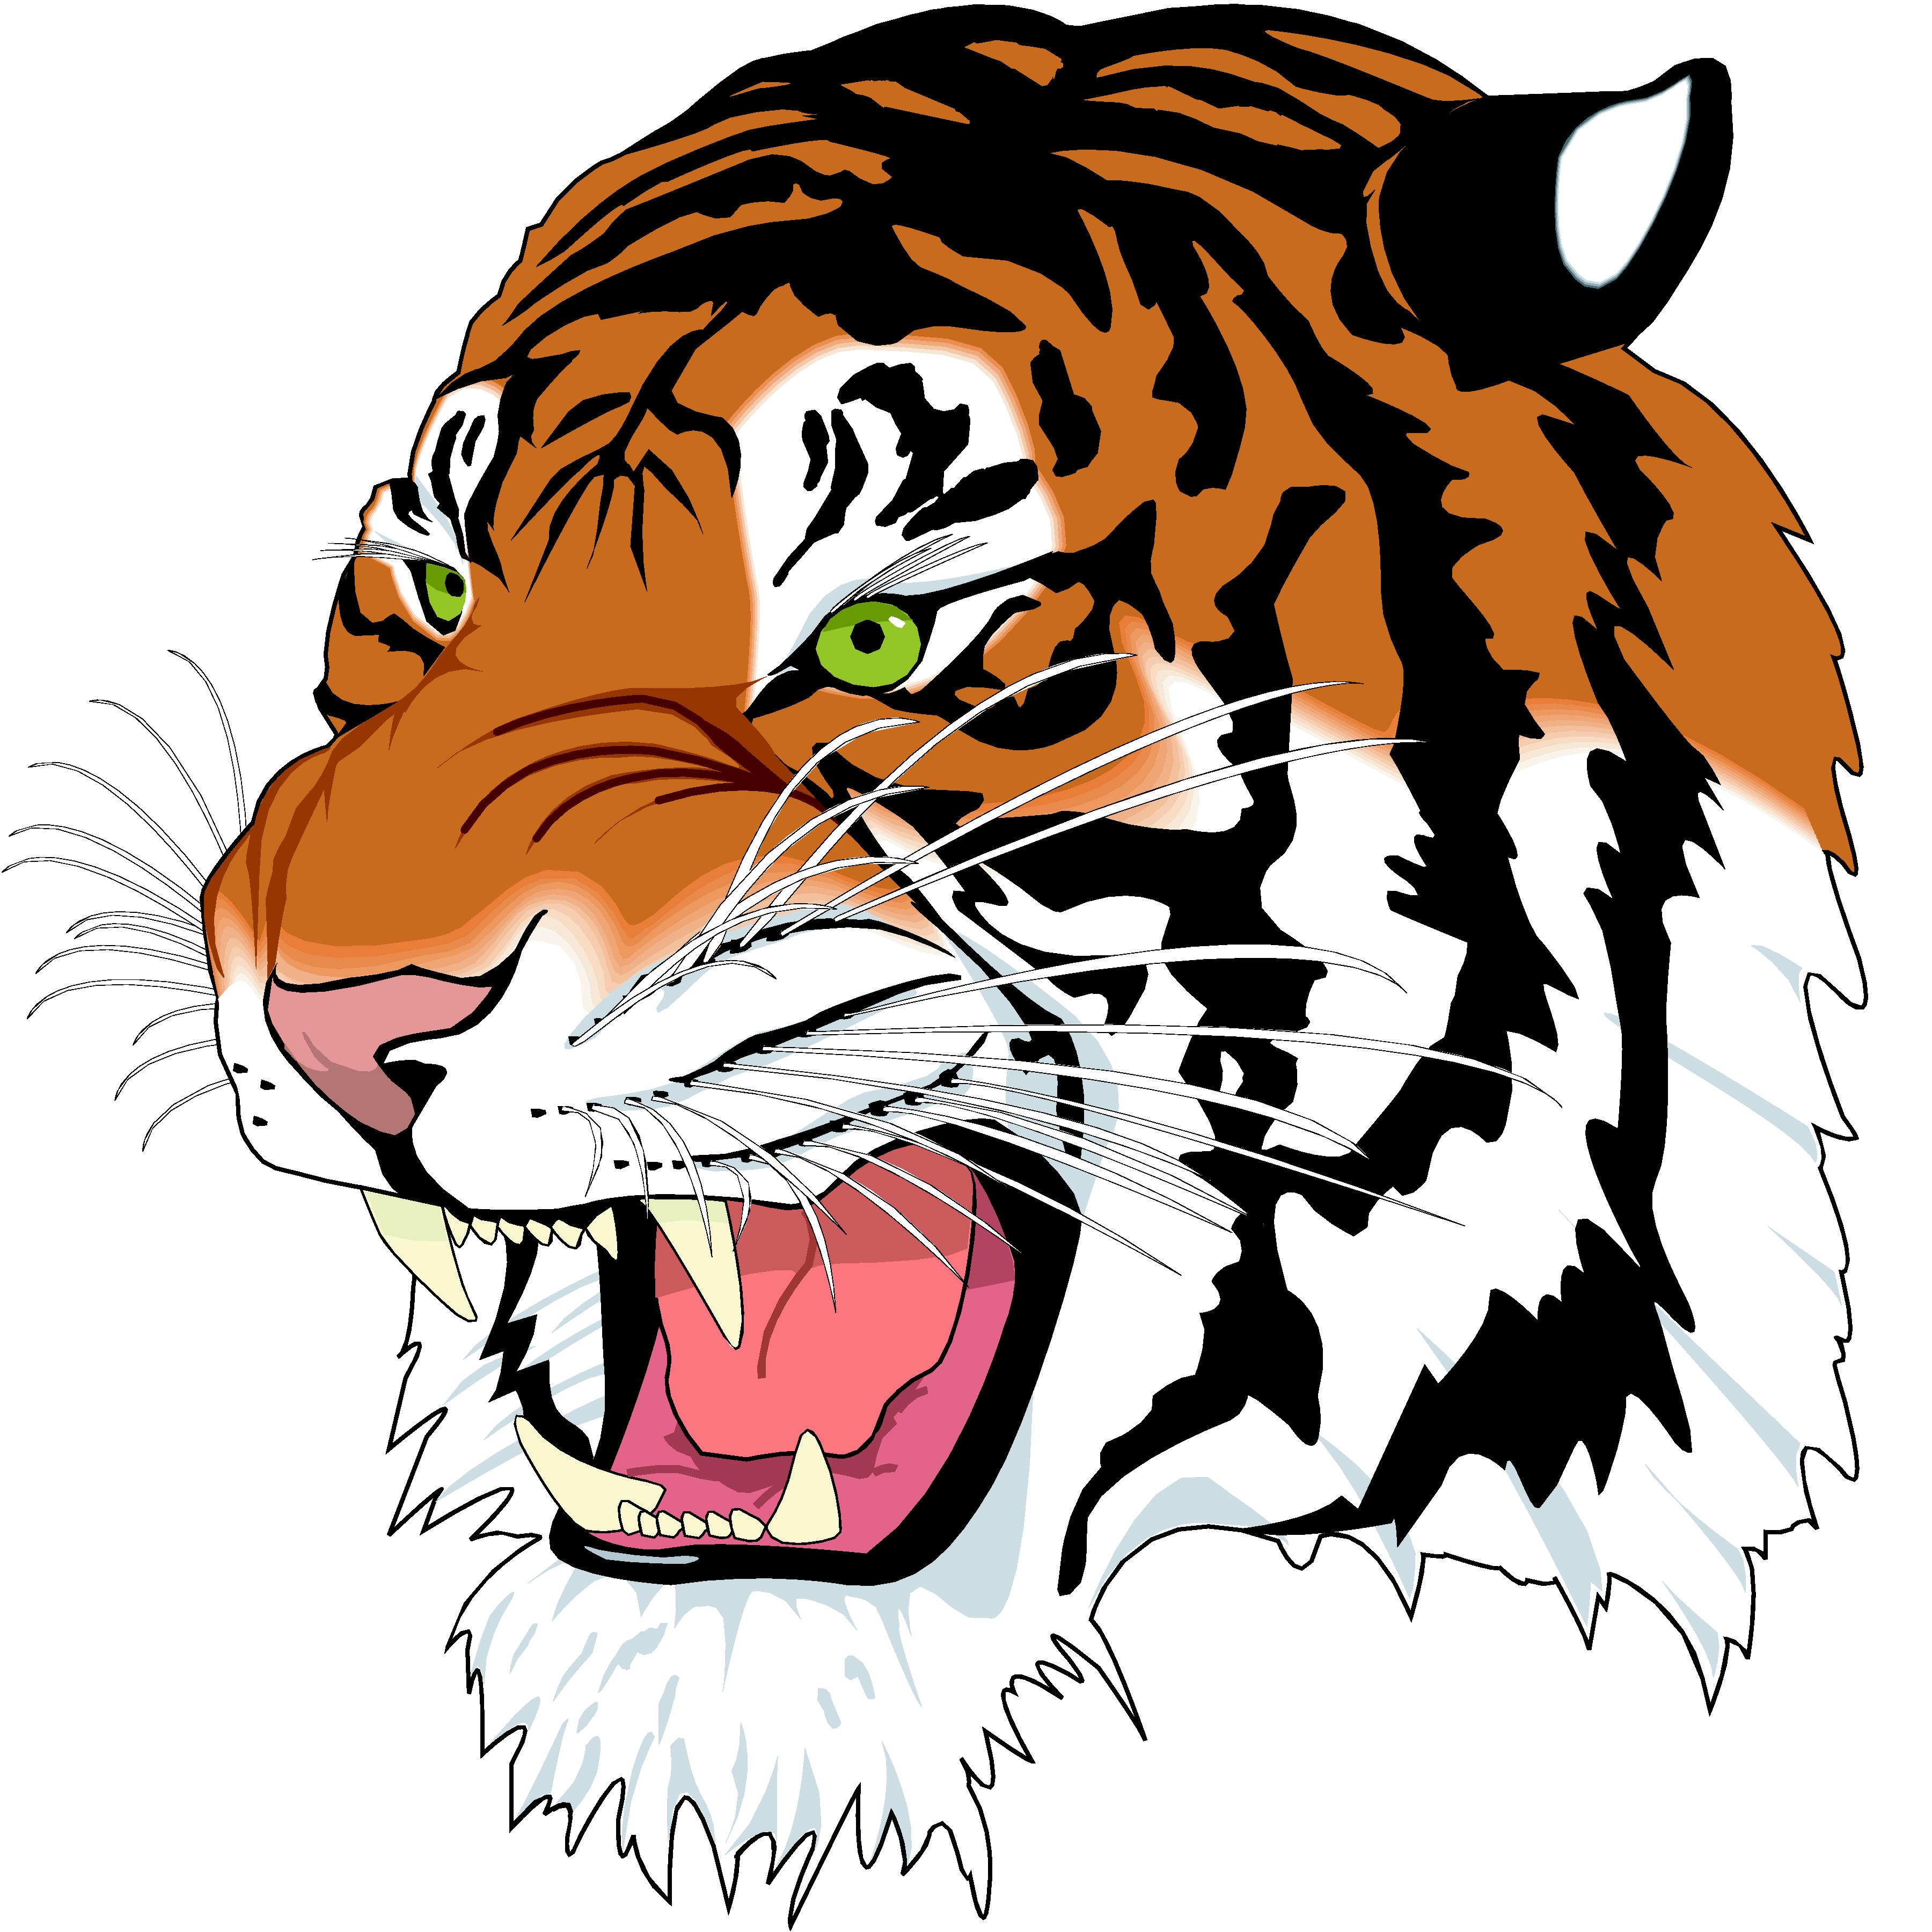 Tiger Face Clip Art Royalty .